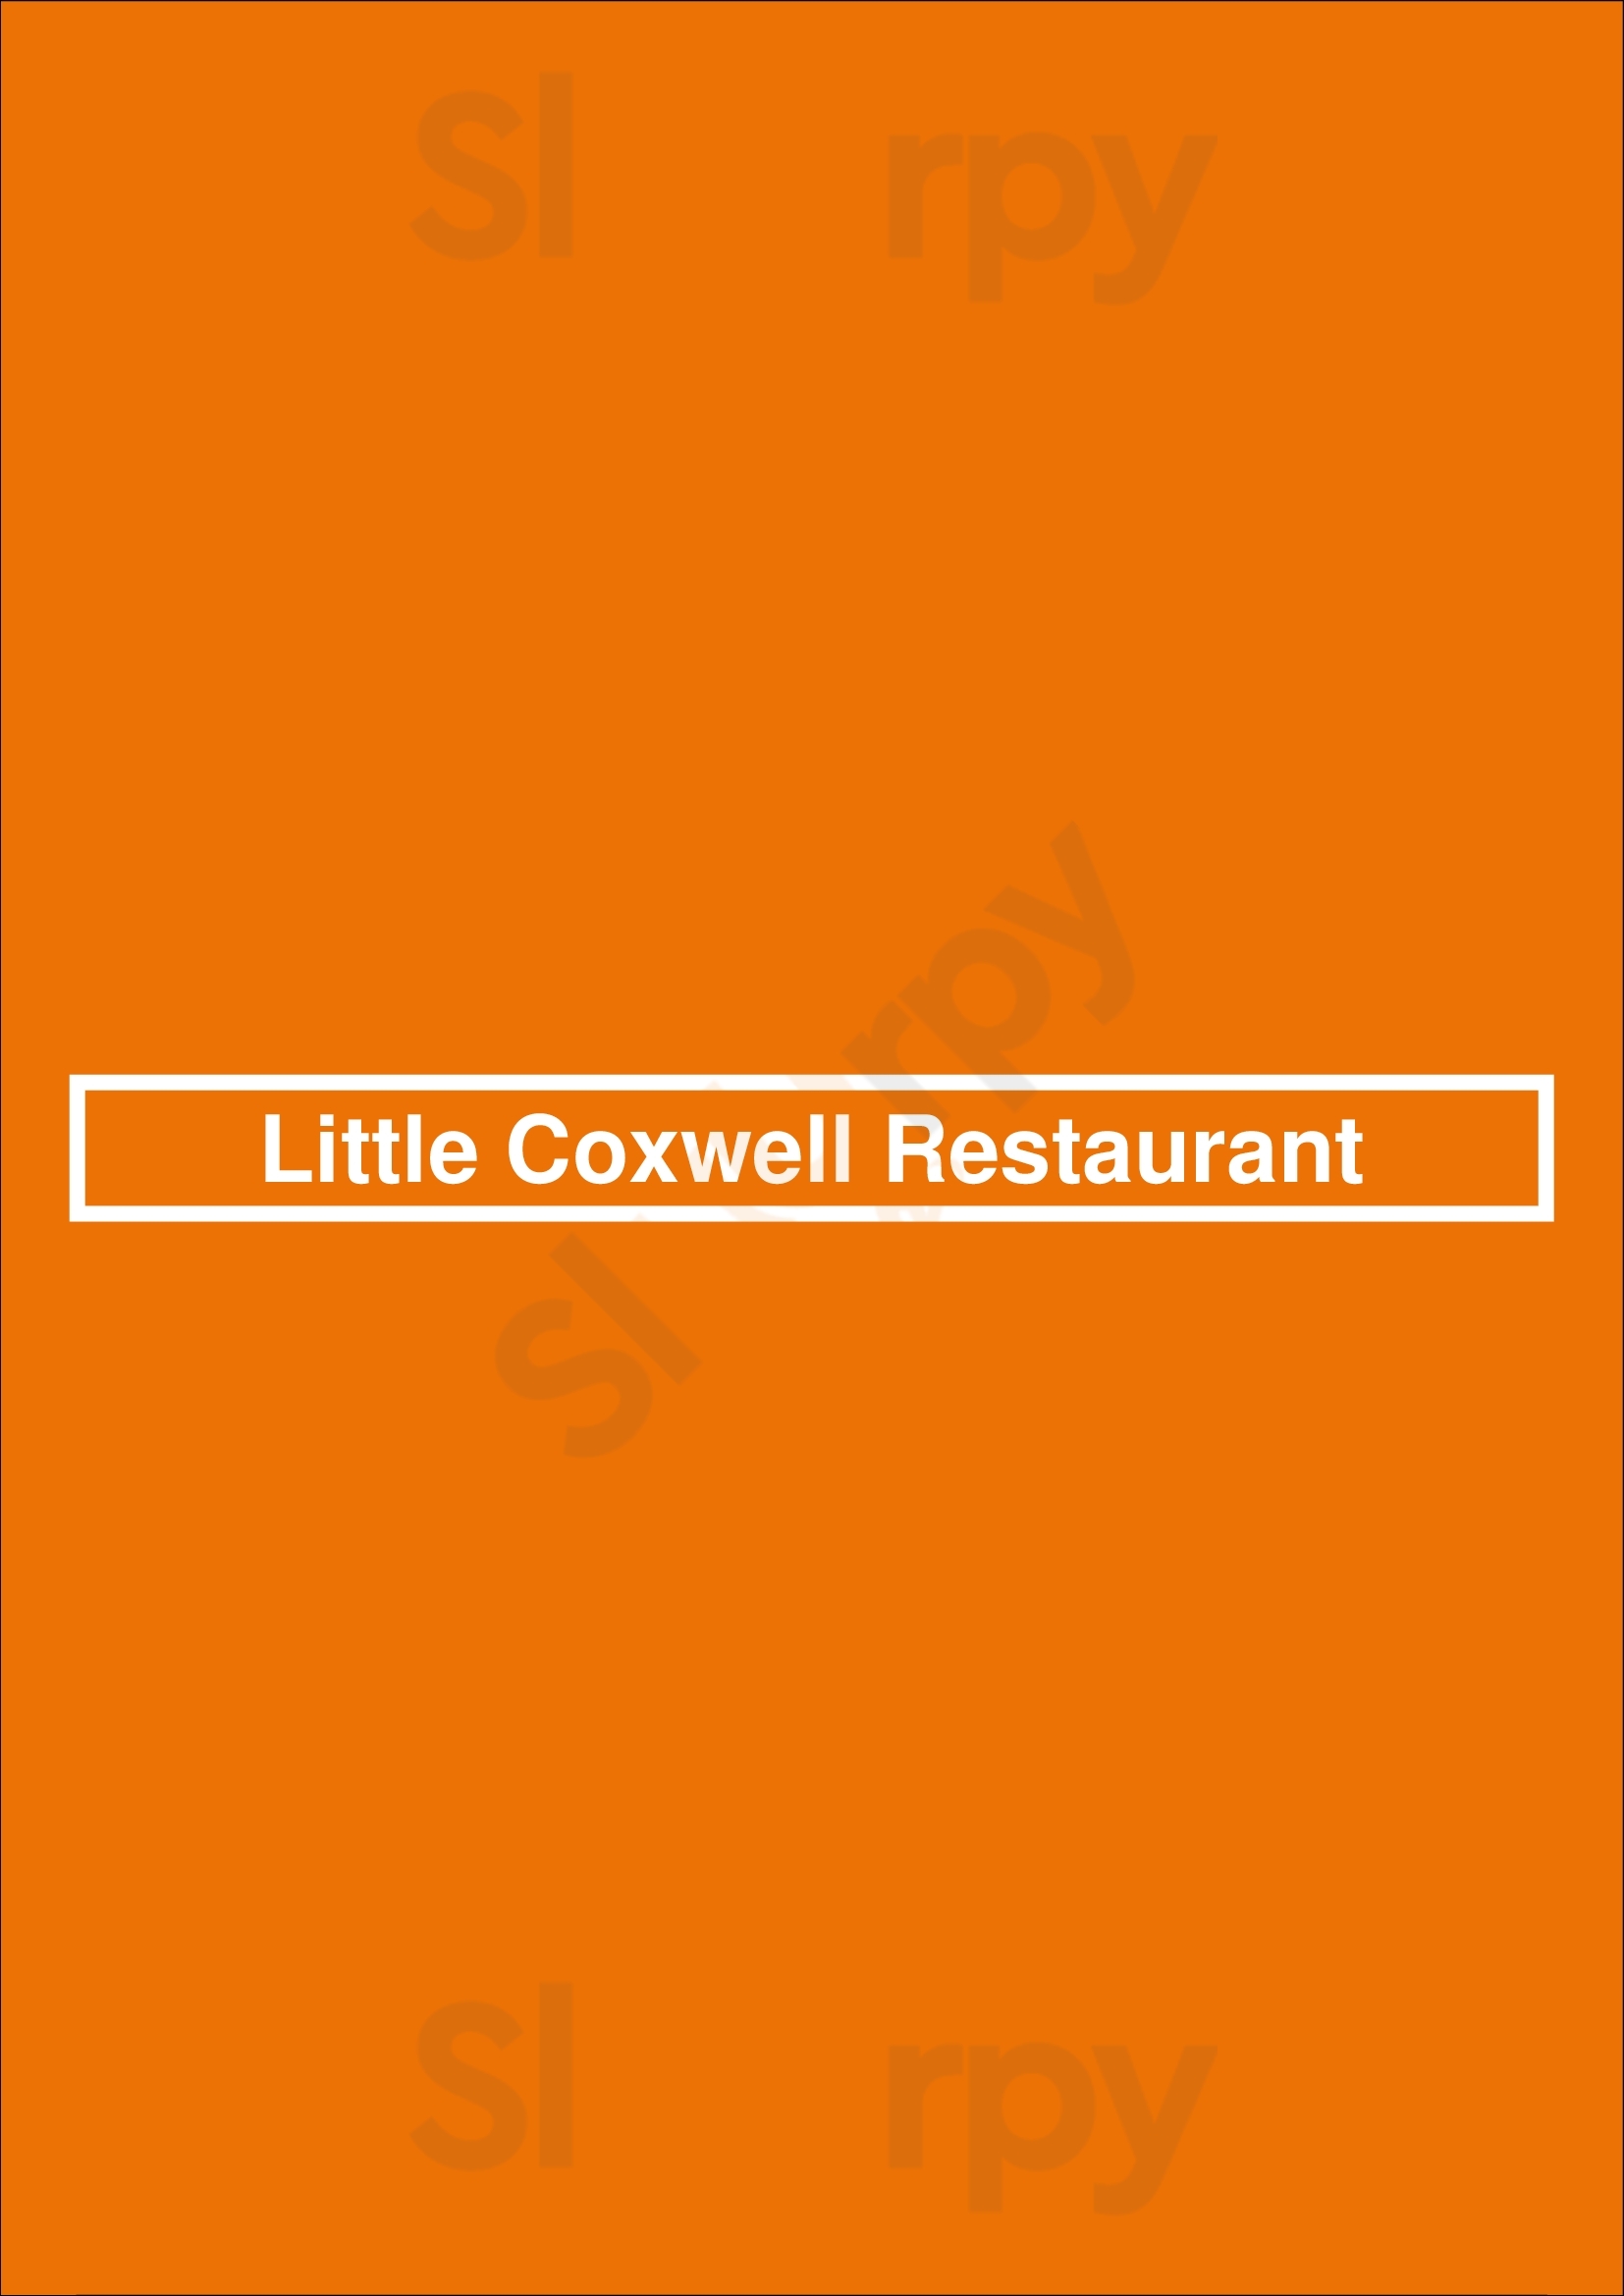 Little Coxwell Restaurant Toronto Menu - 1